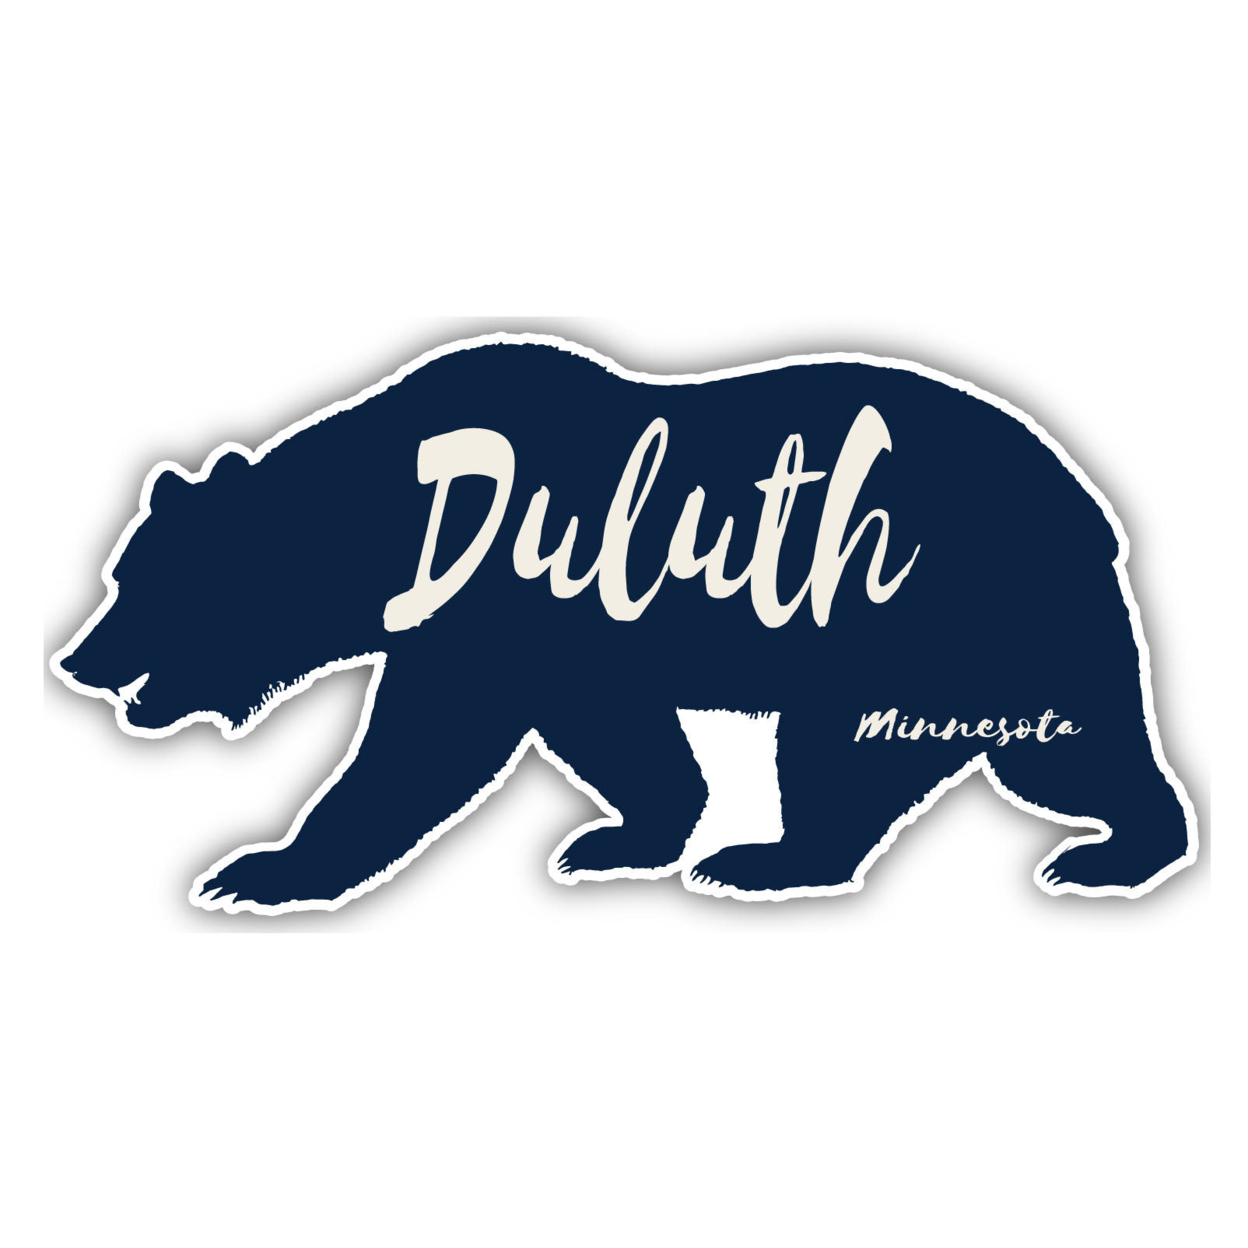 Duluth Minnesota Souvenir Decorative Stickers (Choose Theme And Size) - Single Unit, 6-Inch, Bear